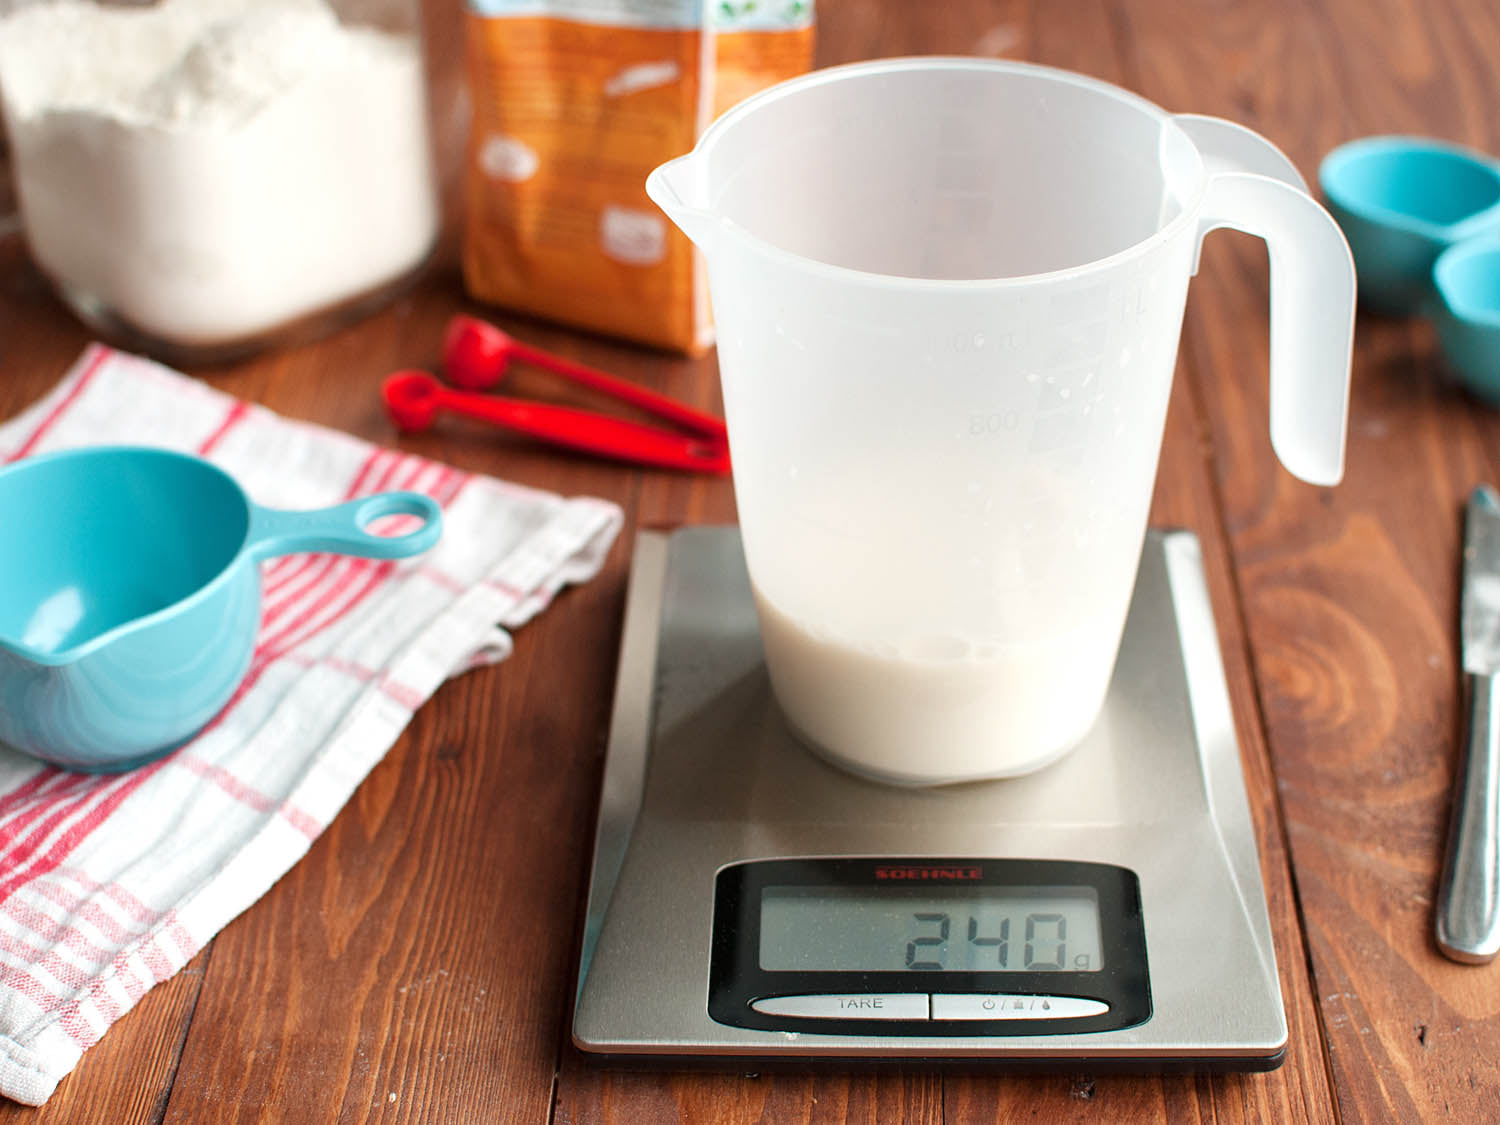 List of ingredients weight - Grams Per Cup